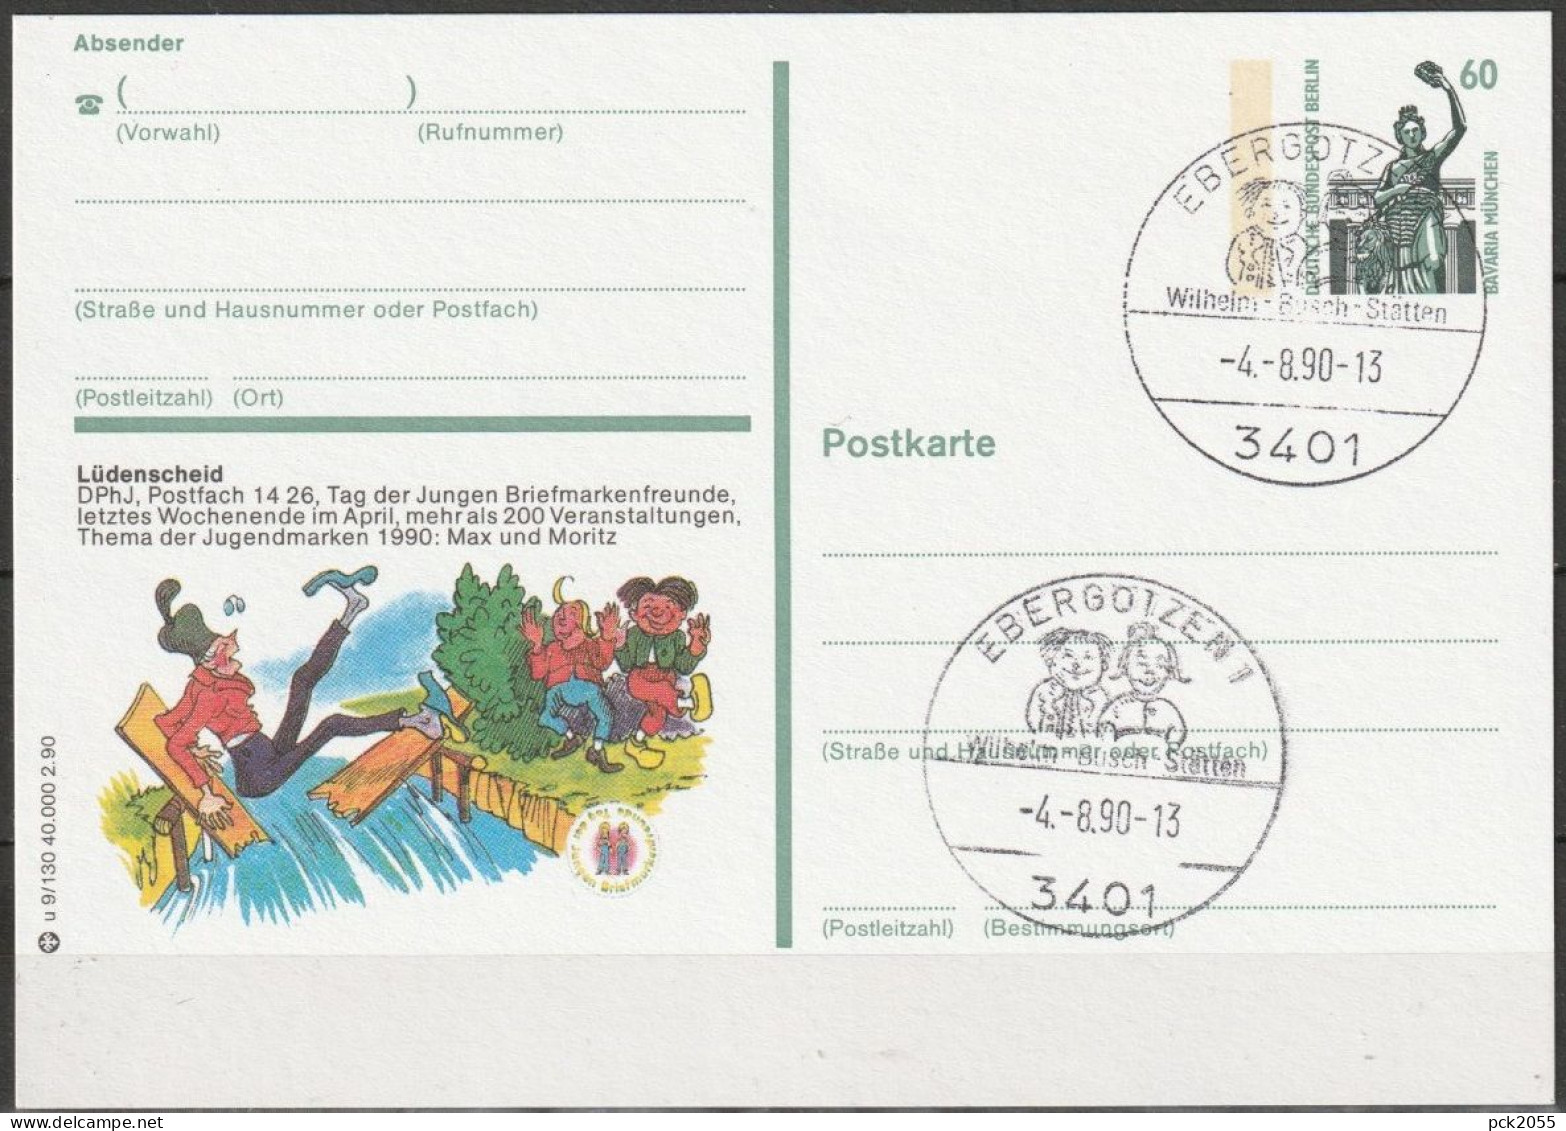 Berlin Ganzsache 1990 Mi.-Nr. P 128 U9/130 Lüdenscheid Sonderstempel EBERGÖTZEN 4.8.90  ( PK 396 ) - Postkarten - Gebraucht